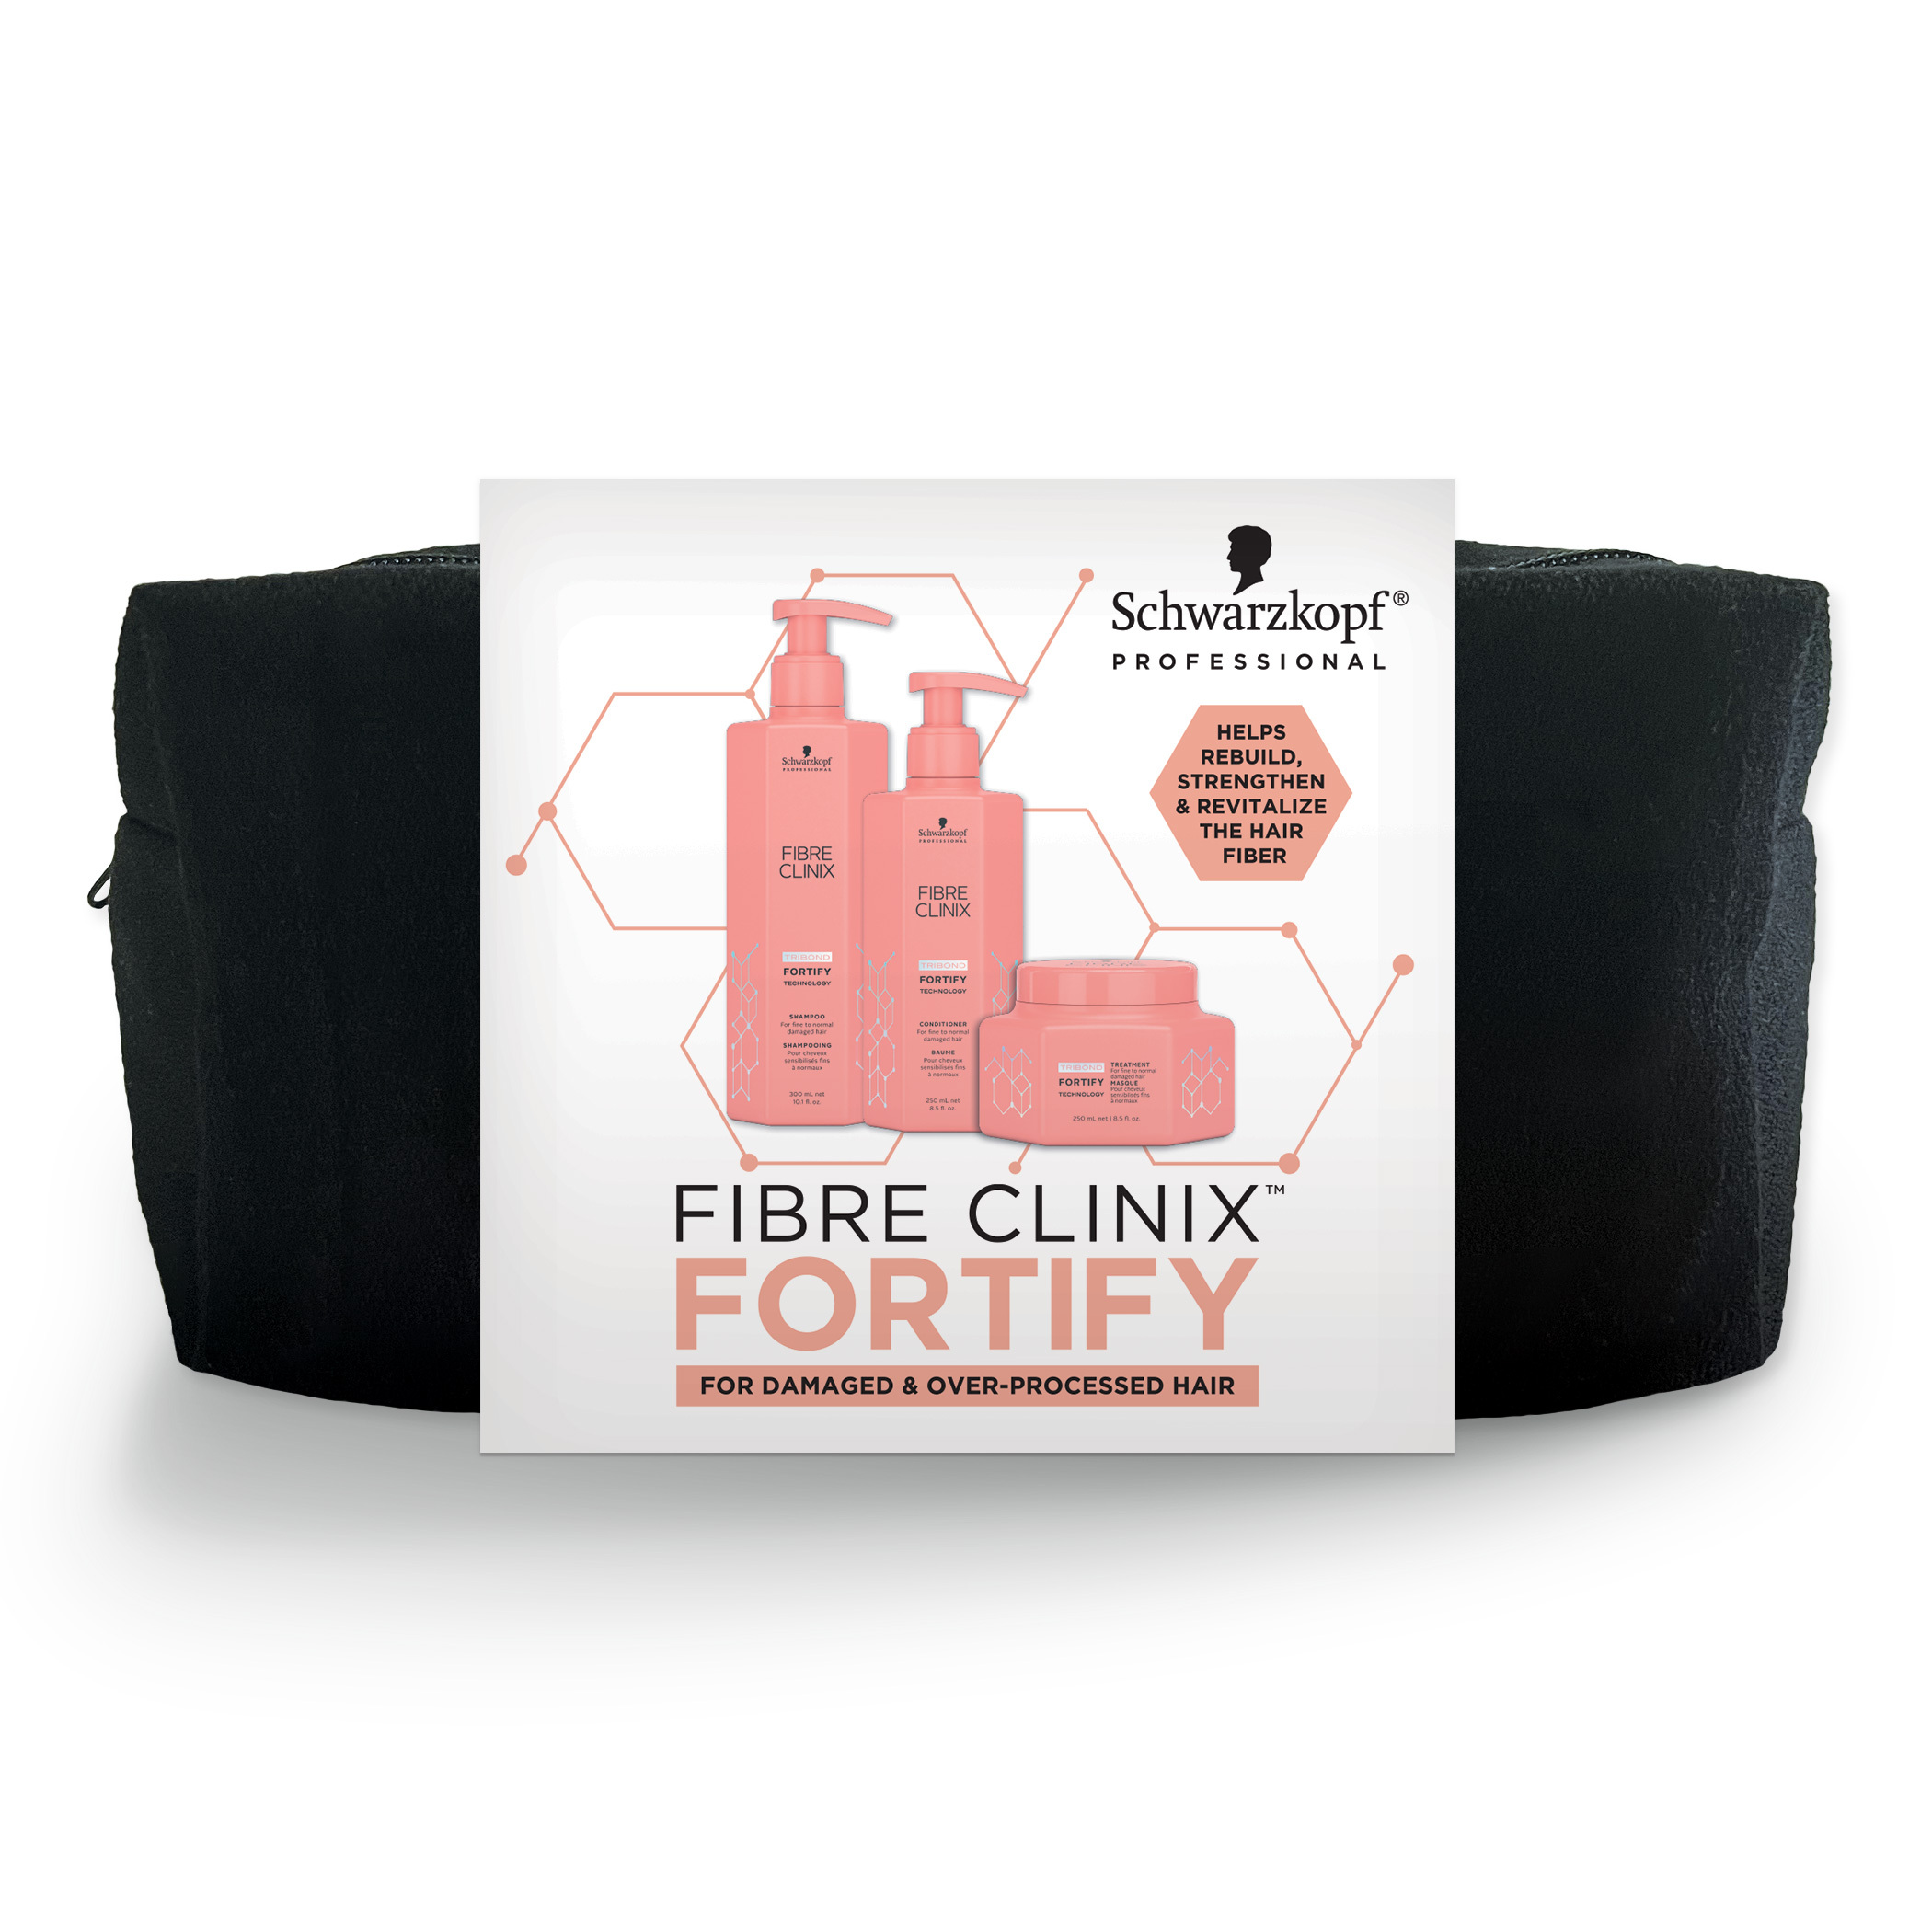 Schwarzkopf Fibre Clinix 3pc Kit with Bag - Fortify